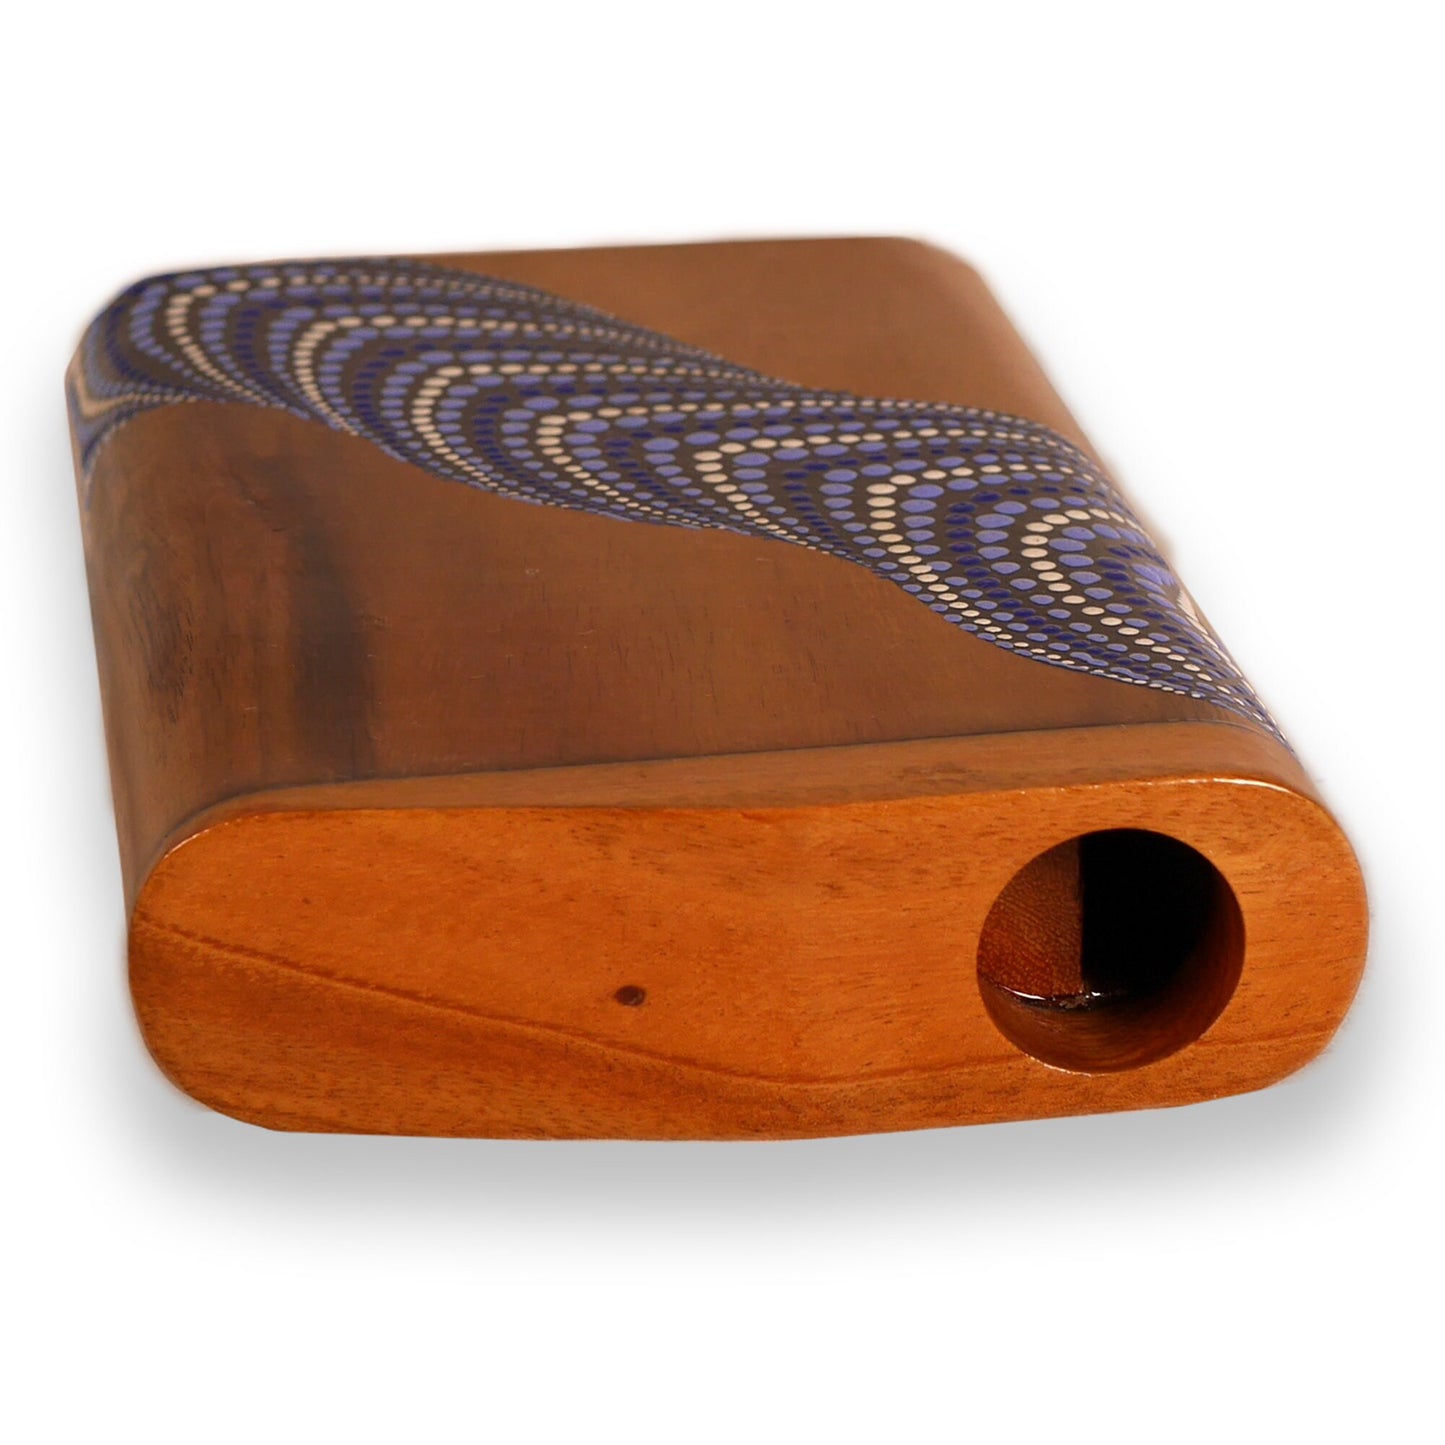 portable compact Aboriginal travel didgeridoo made of wood